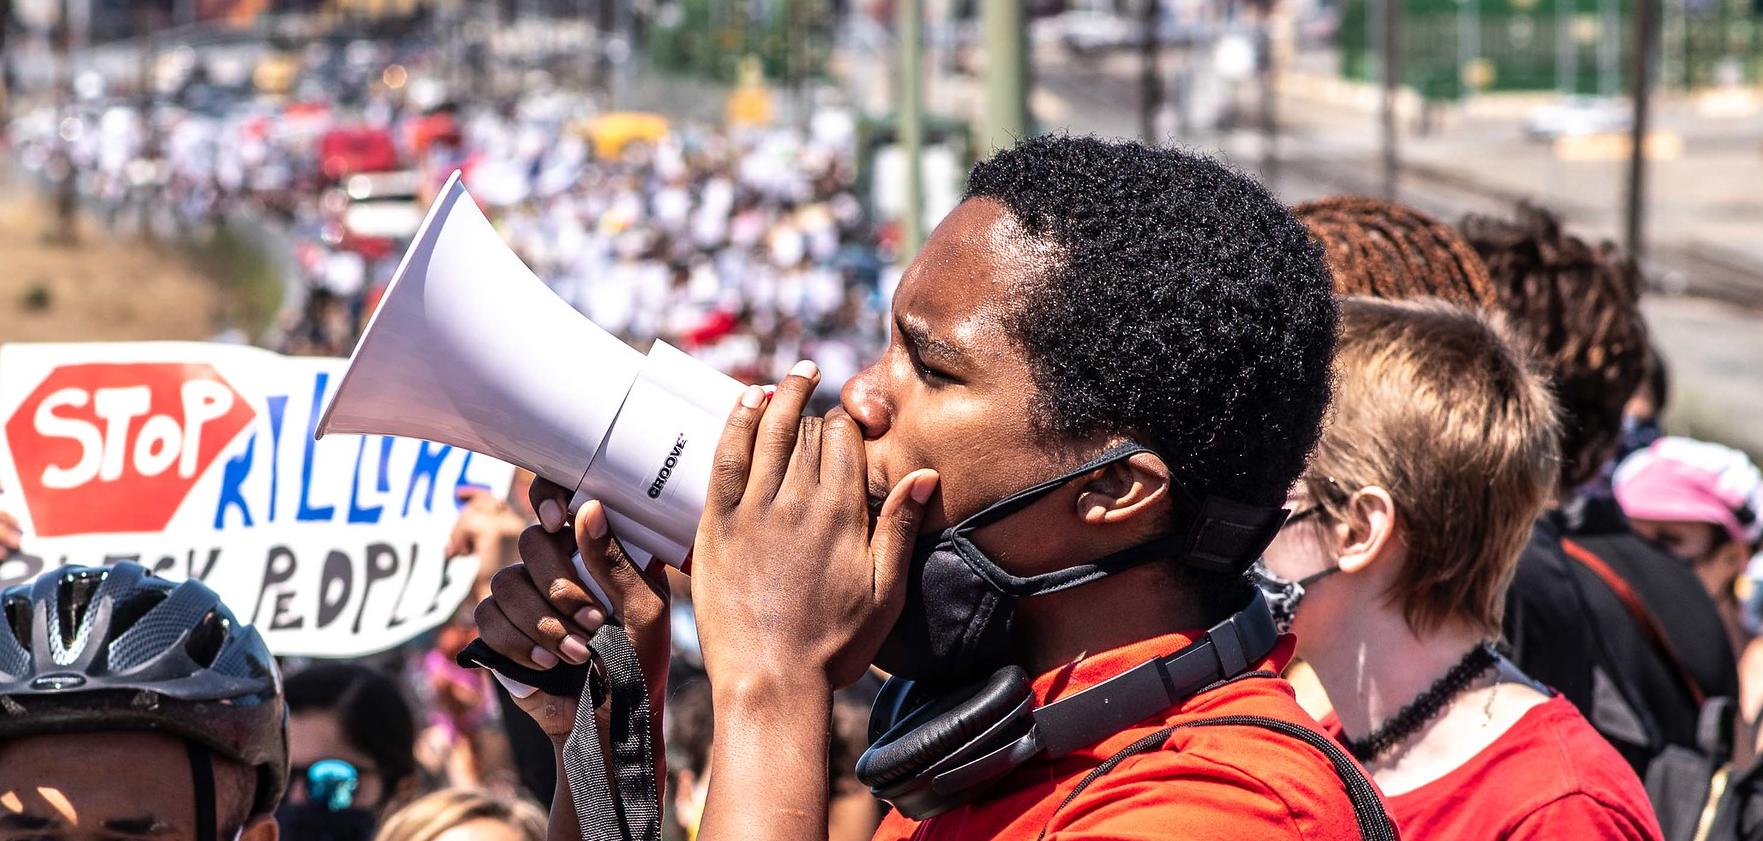 Protest organizer with a bullhorn